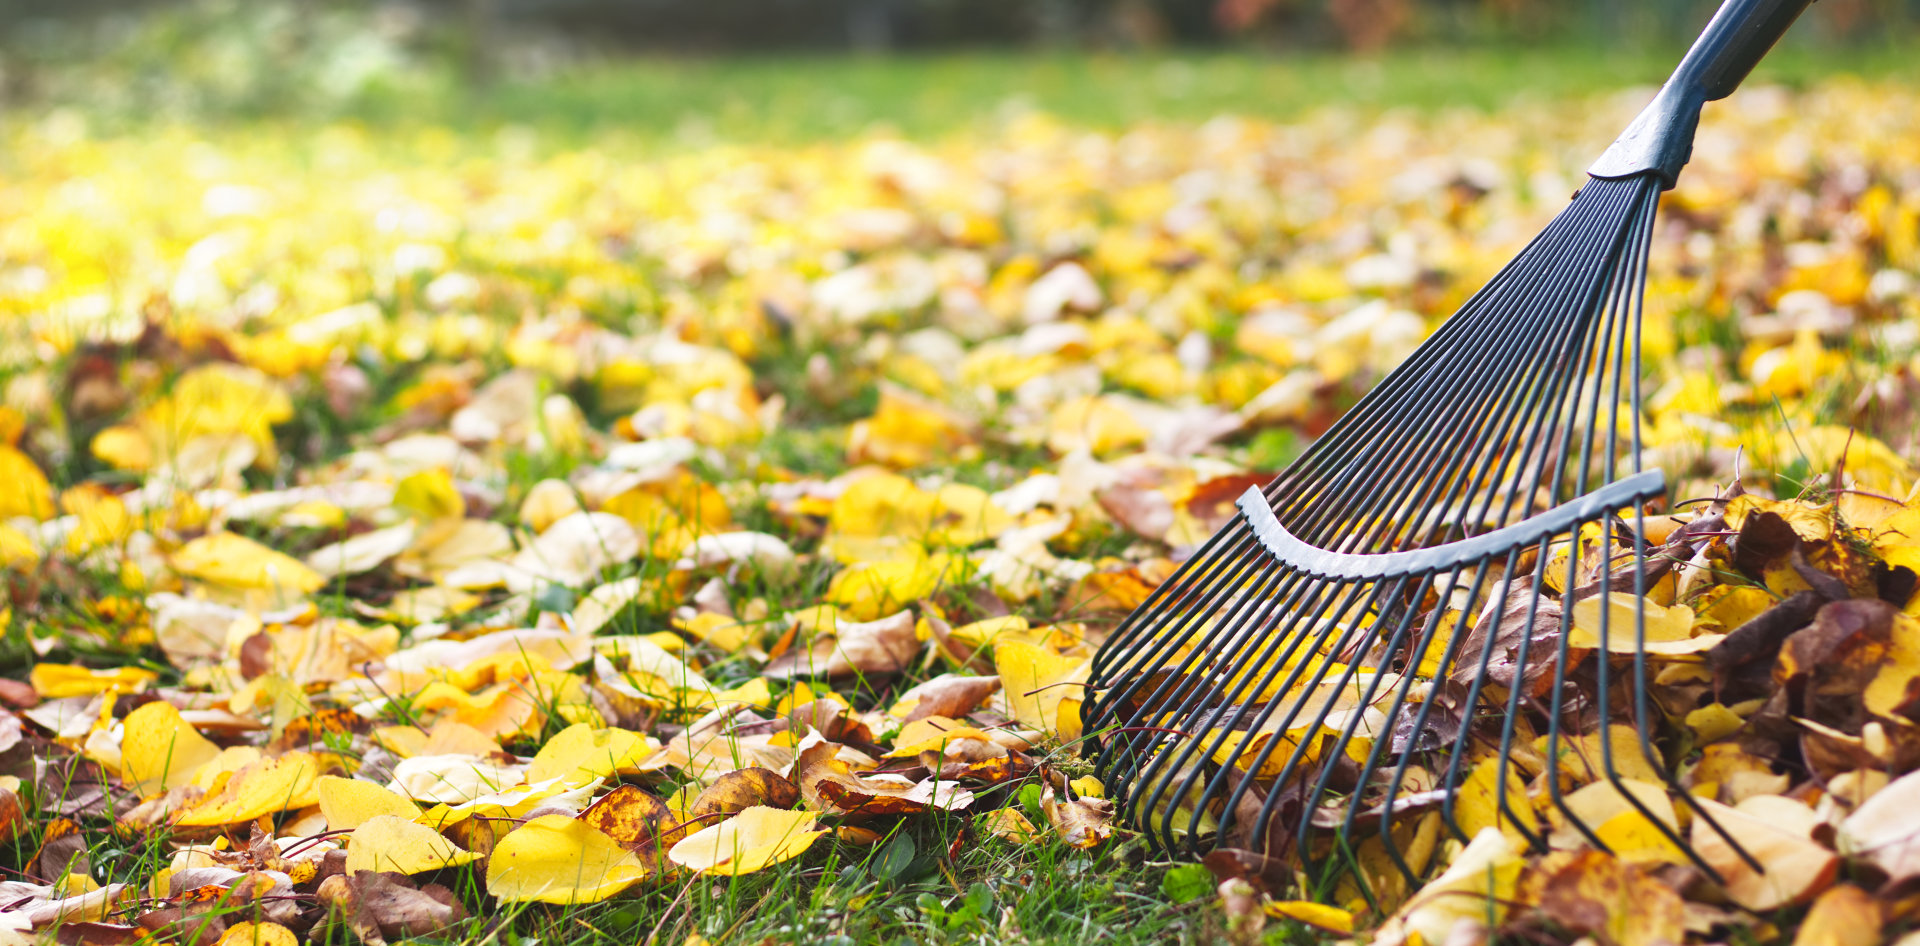 rake with fallen leaves